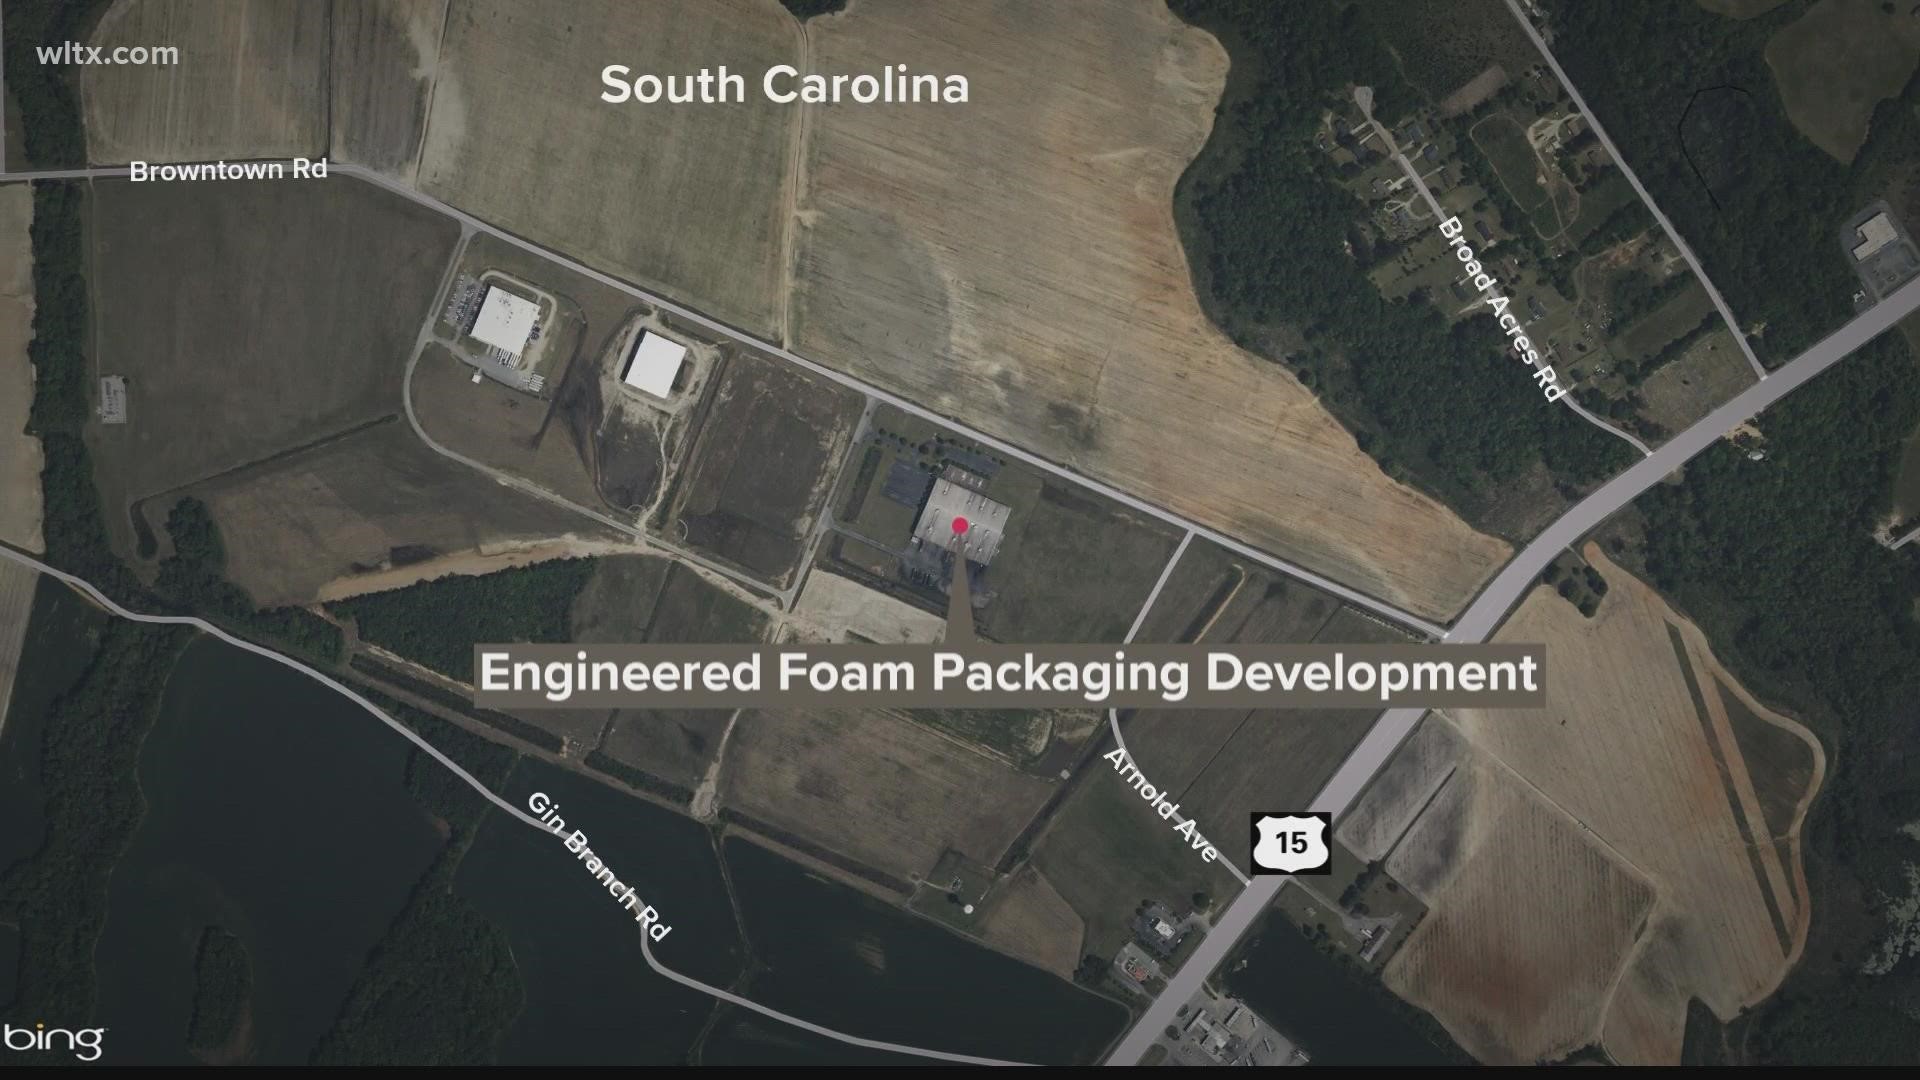 Engineered Foam Packaging to open near Bishopville, SC in August 